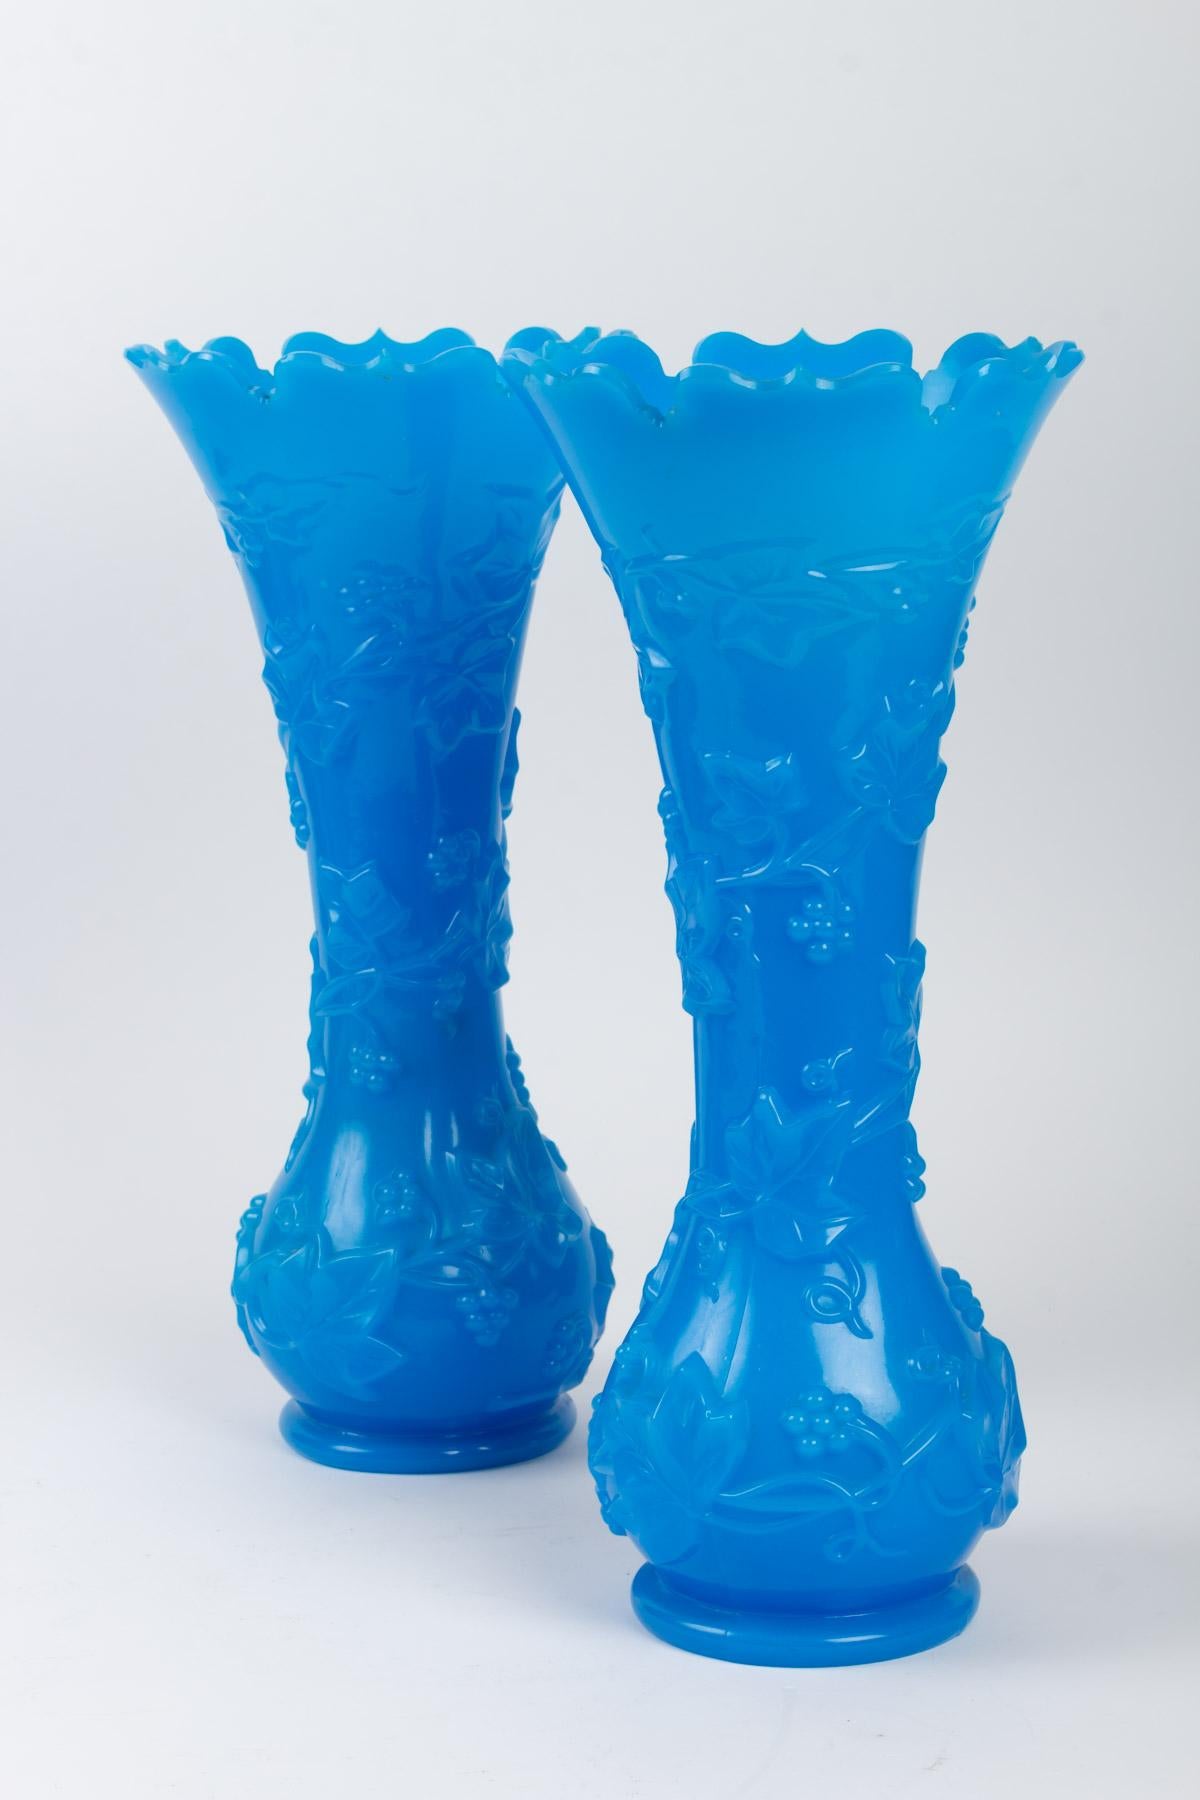 Important pair of blue opaline vases, 19th century, 1860, Napoleon III.
Measures: H 40 cm, D 18 cm.